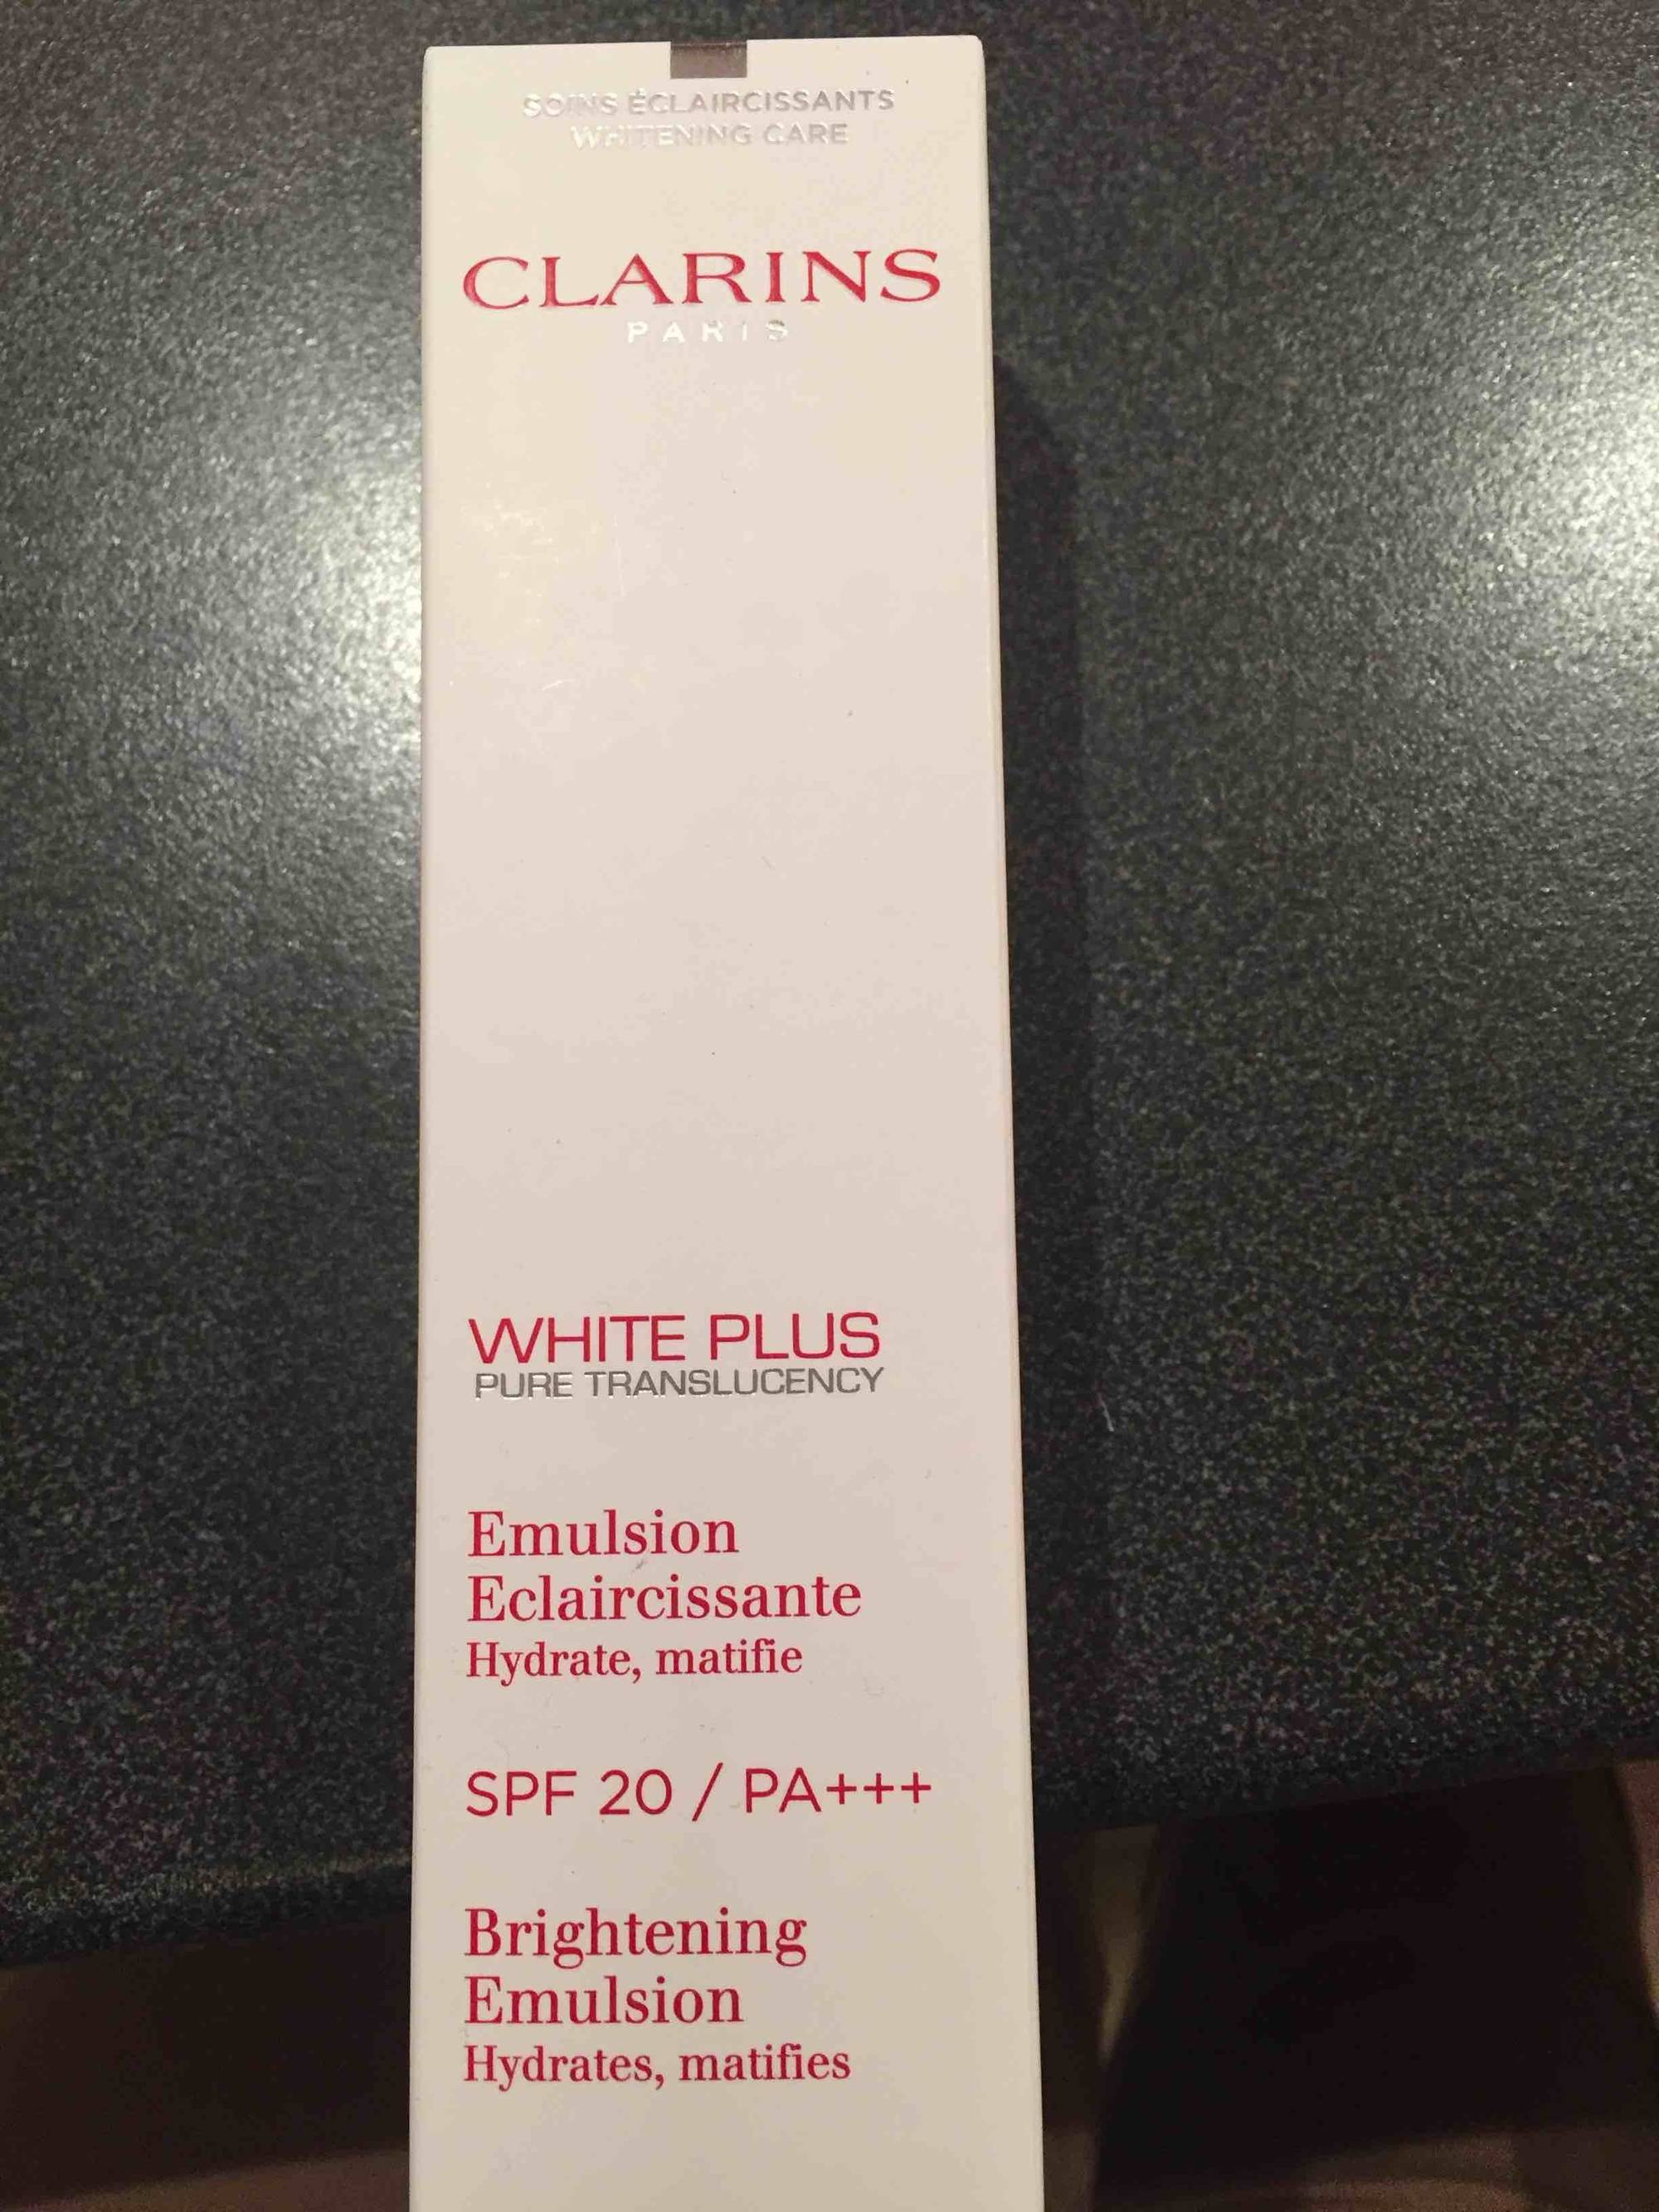 CLARINS - White plus - Emulsion éclaircissante hydrate spf 20